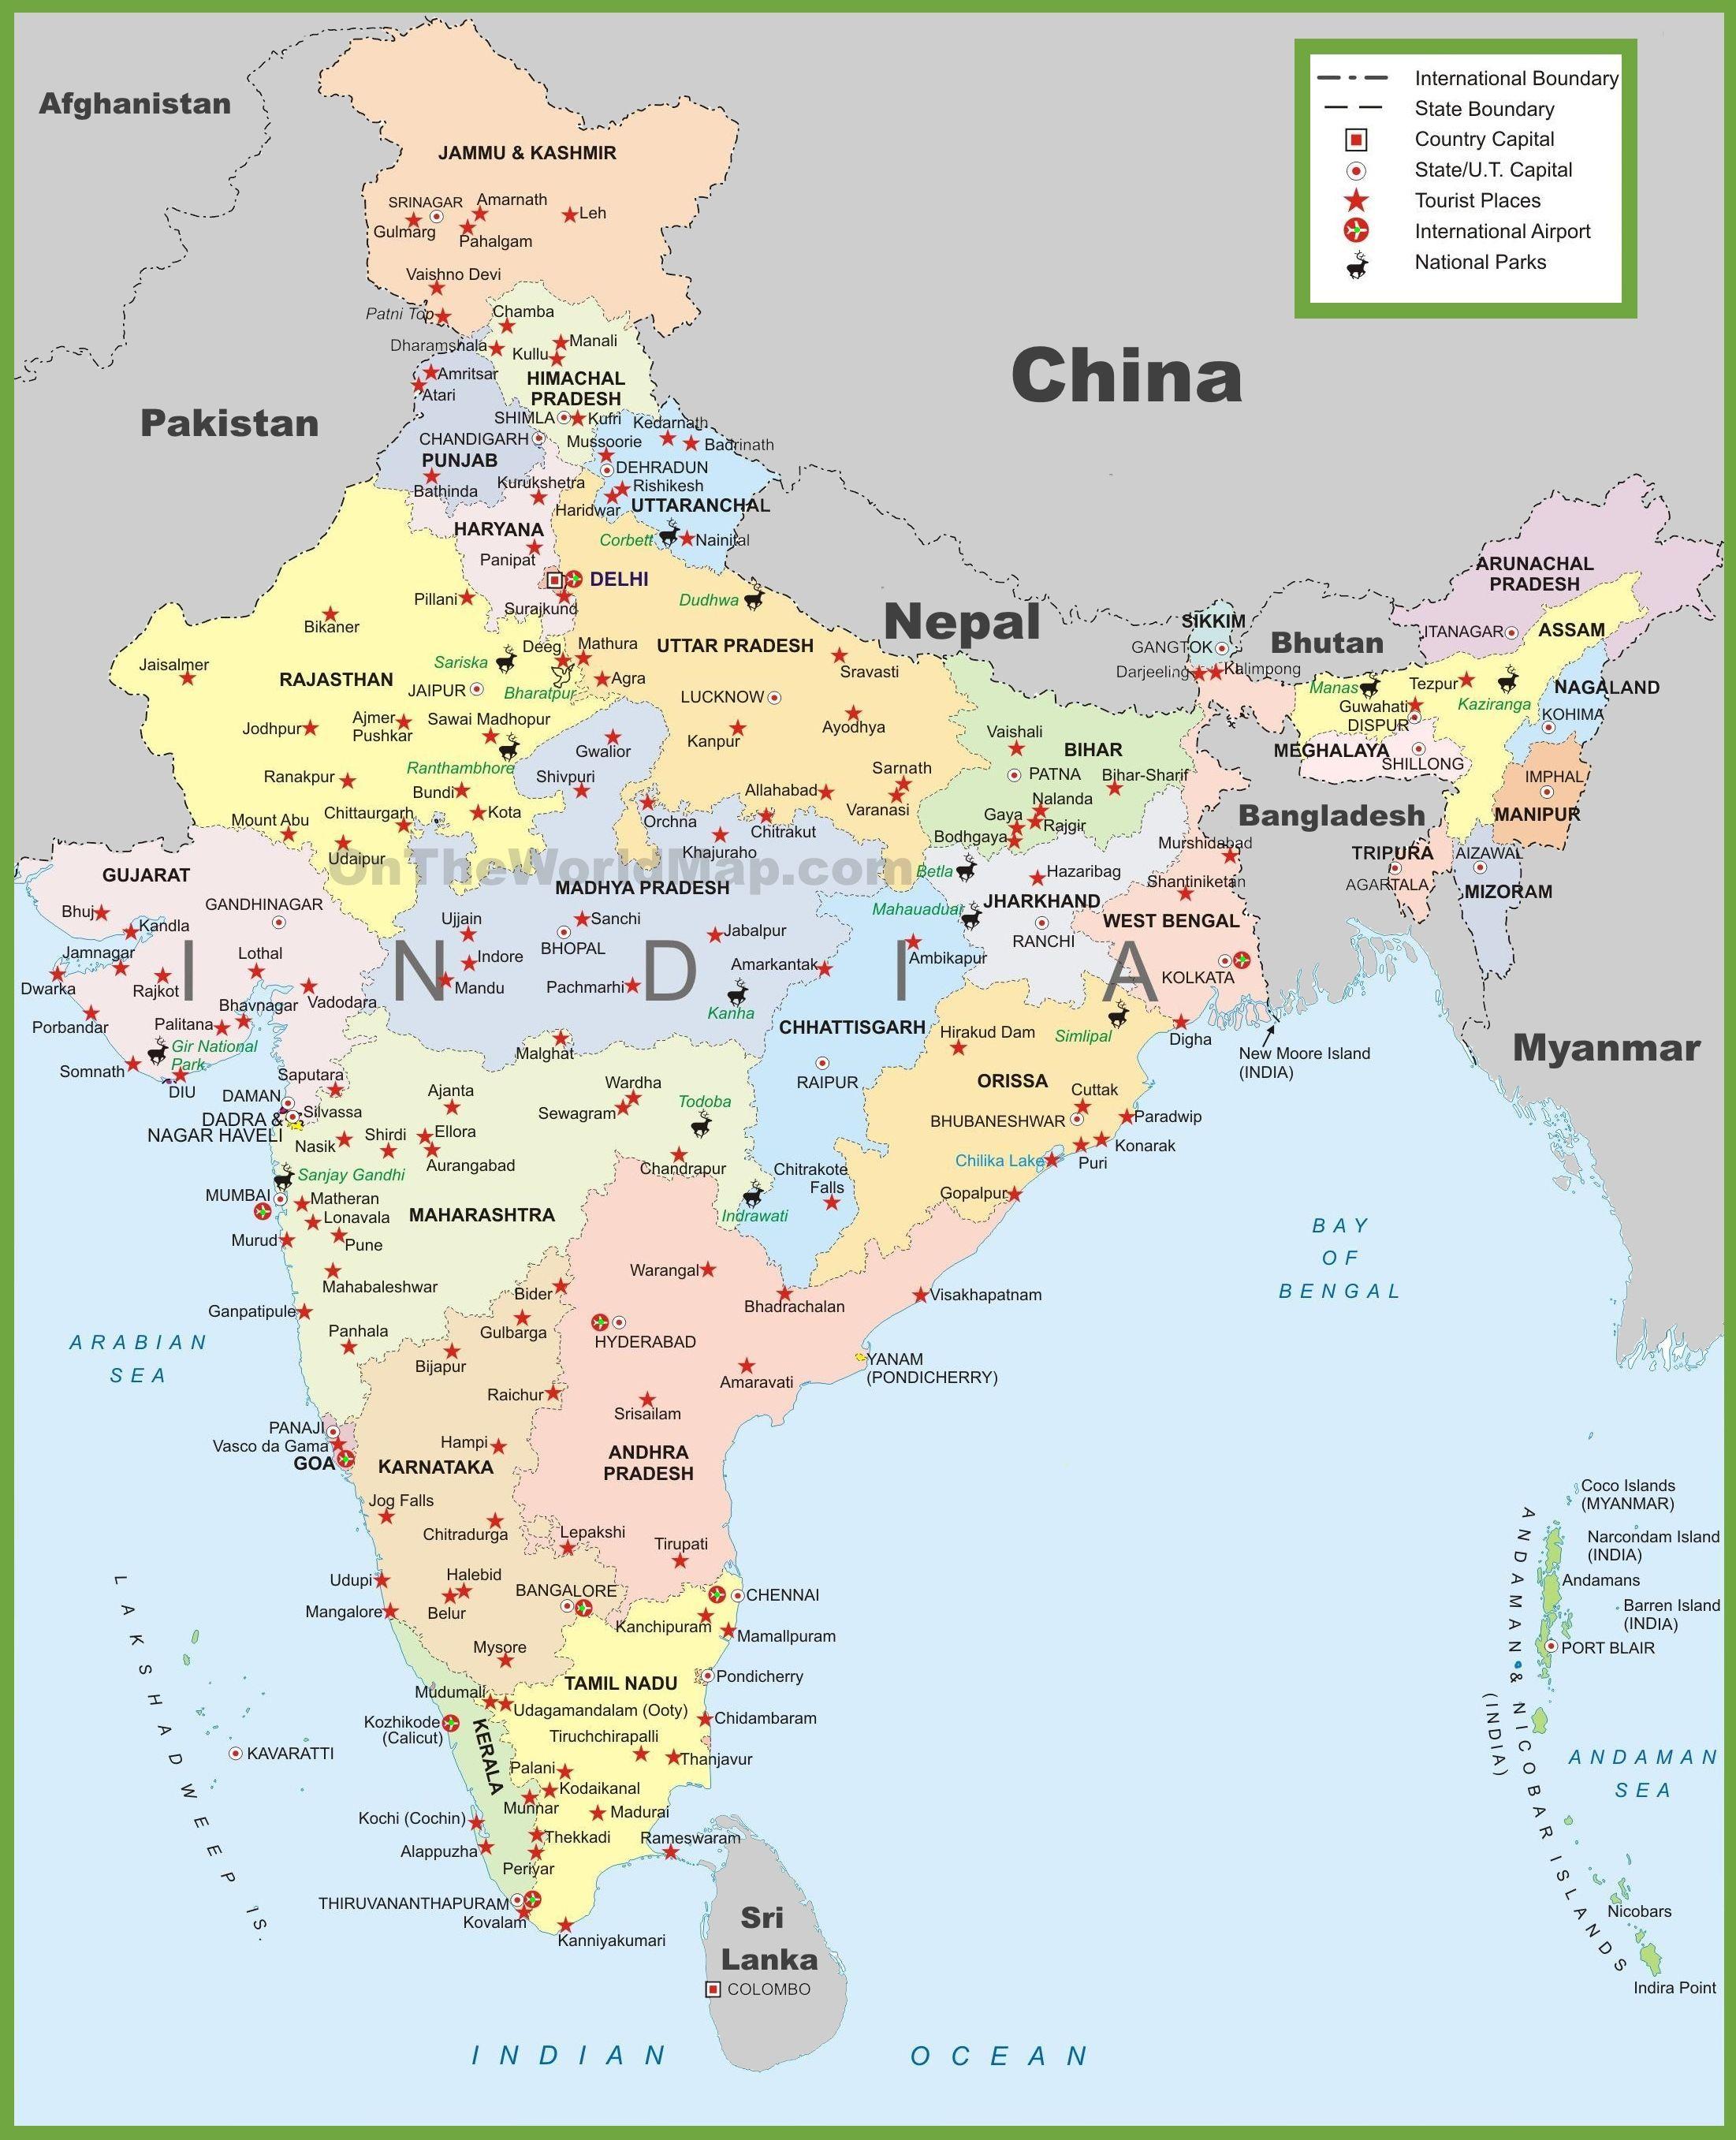 india tourist map